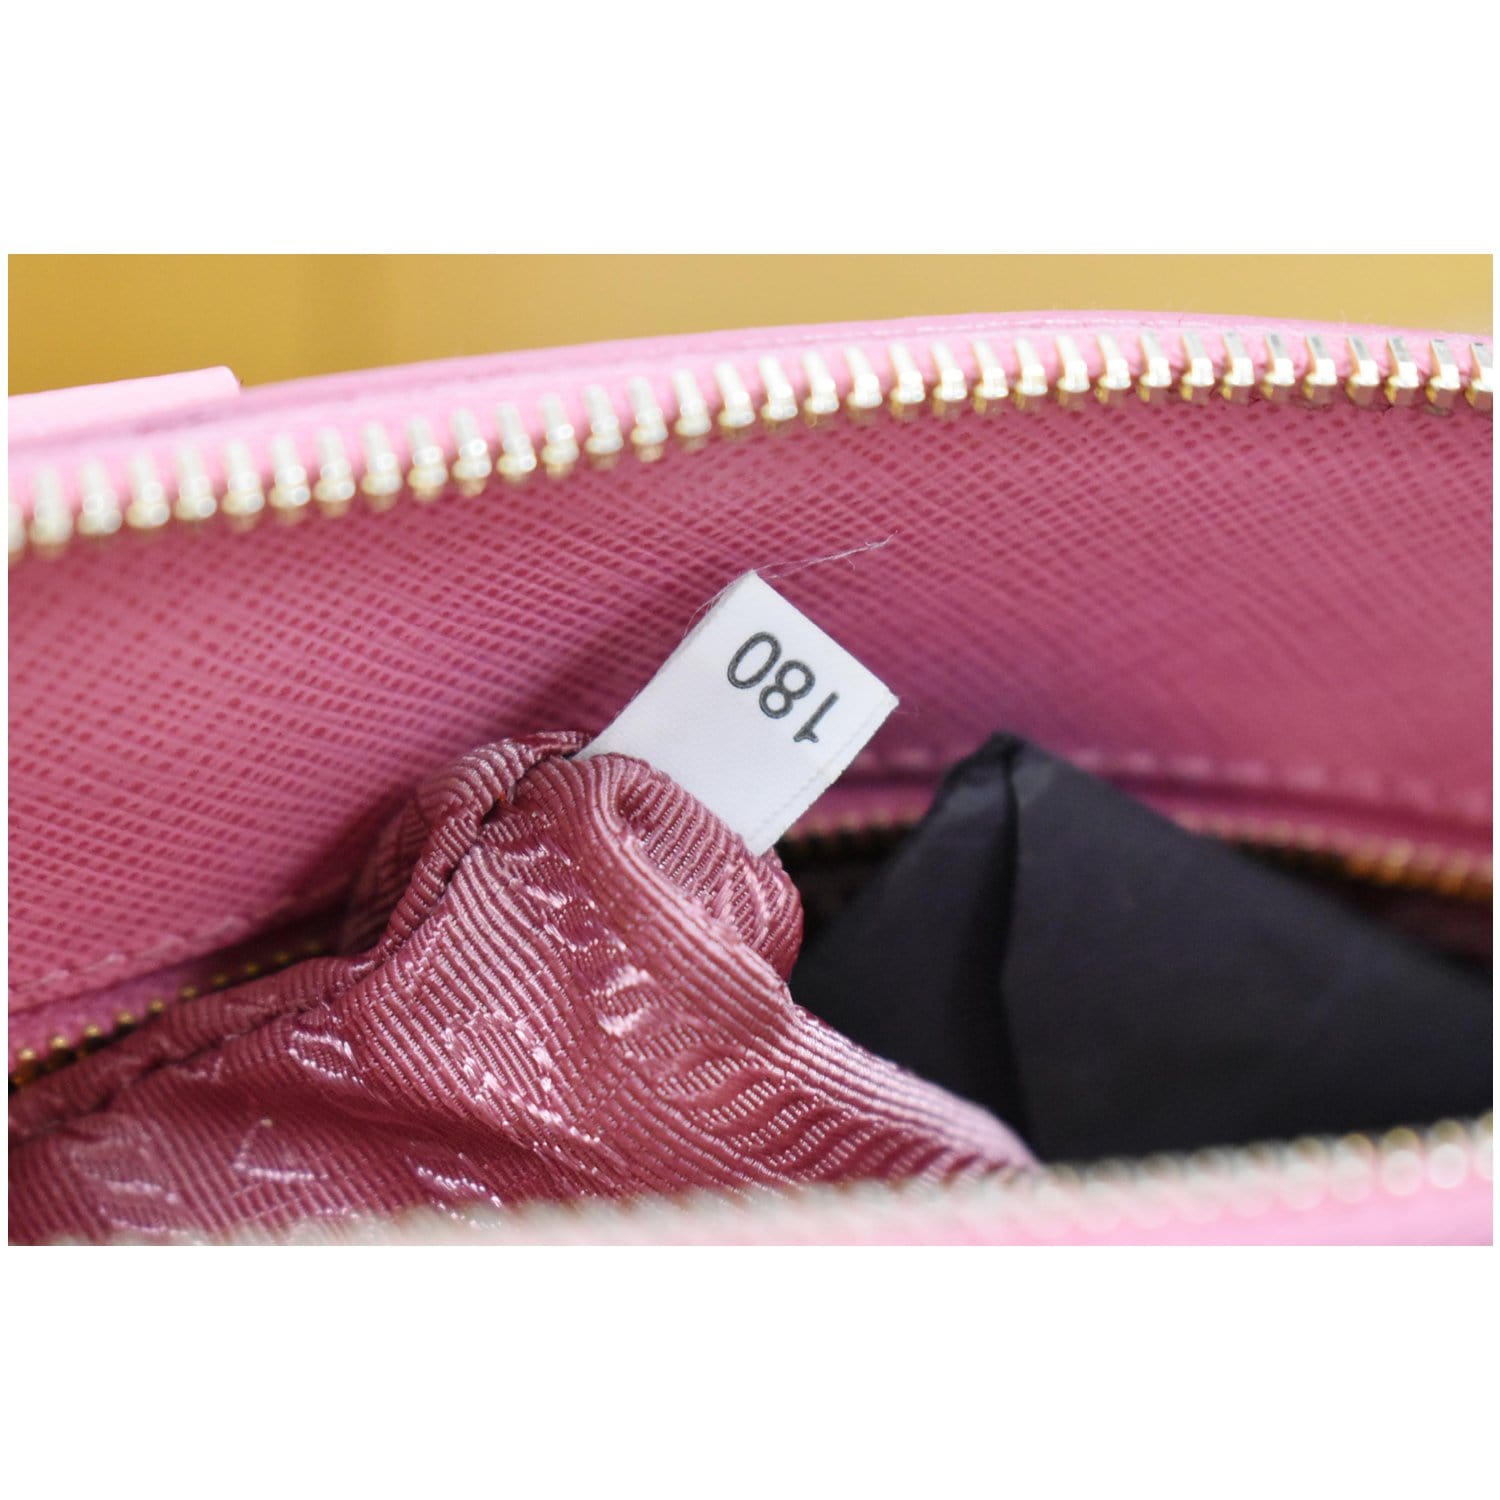 PRADA Promenade Mini Saffiano Leather Satchel Bag Pink